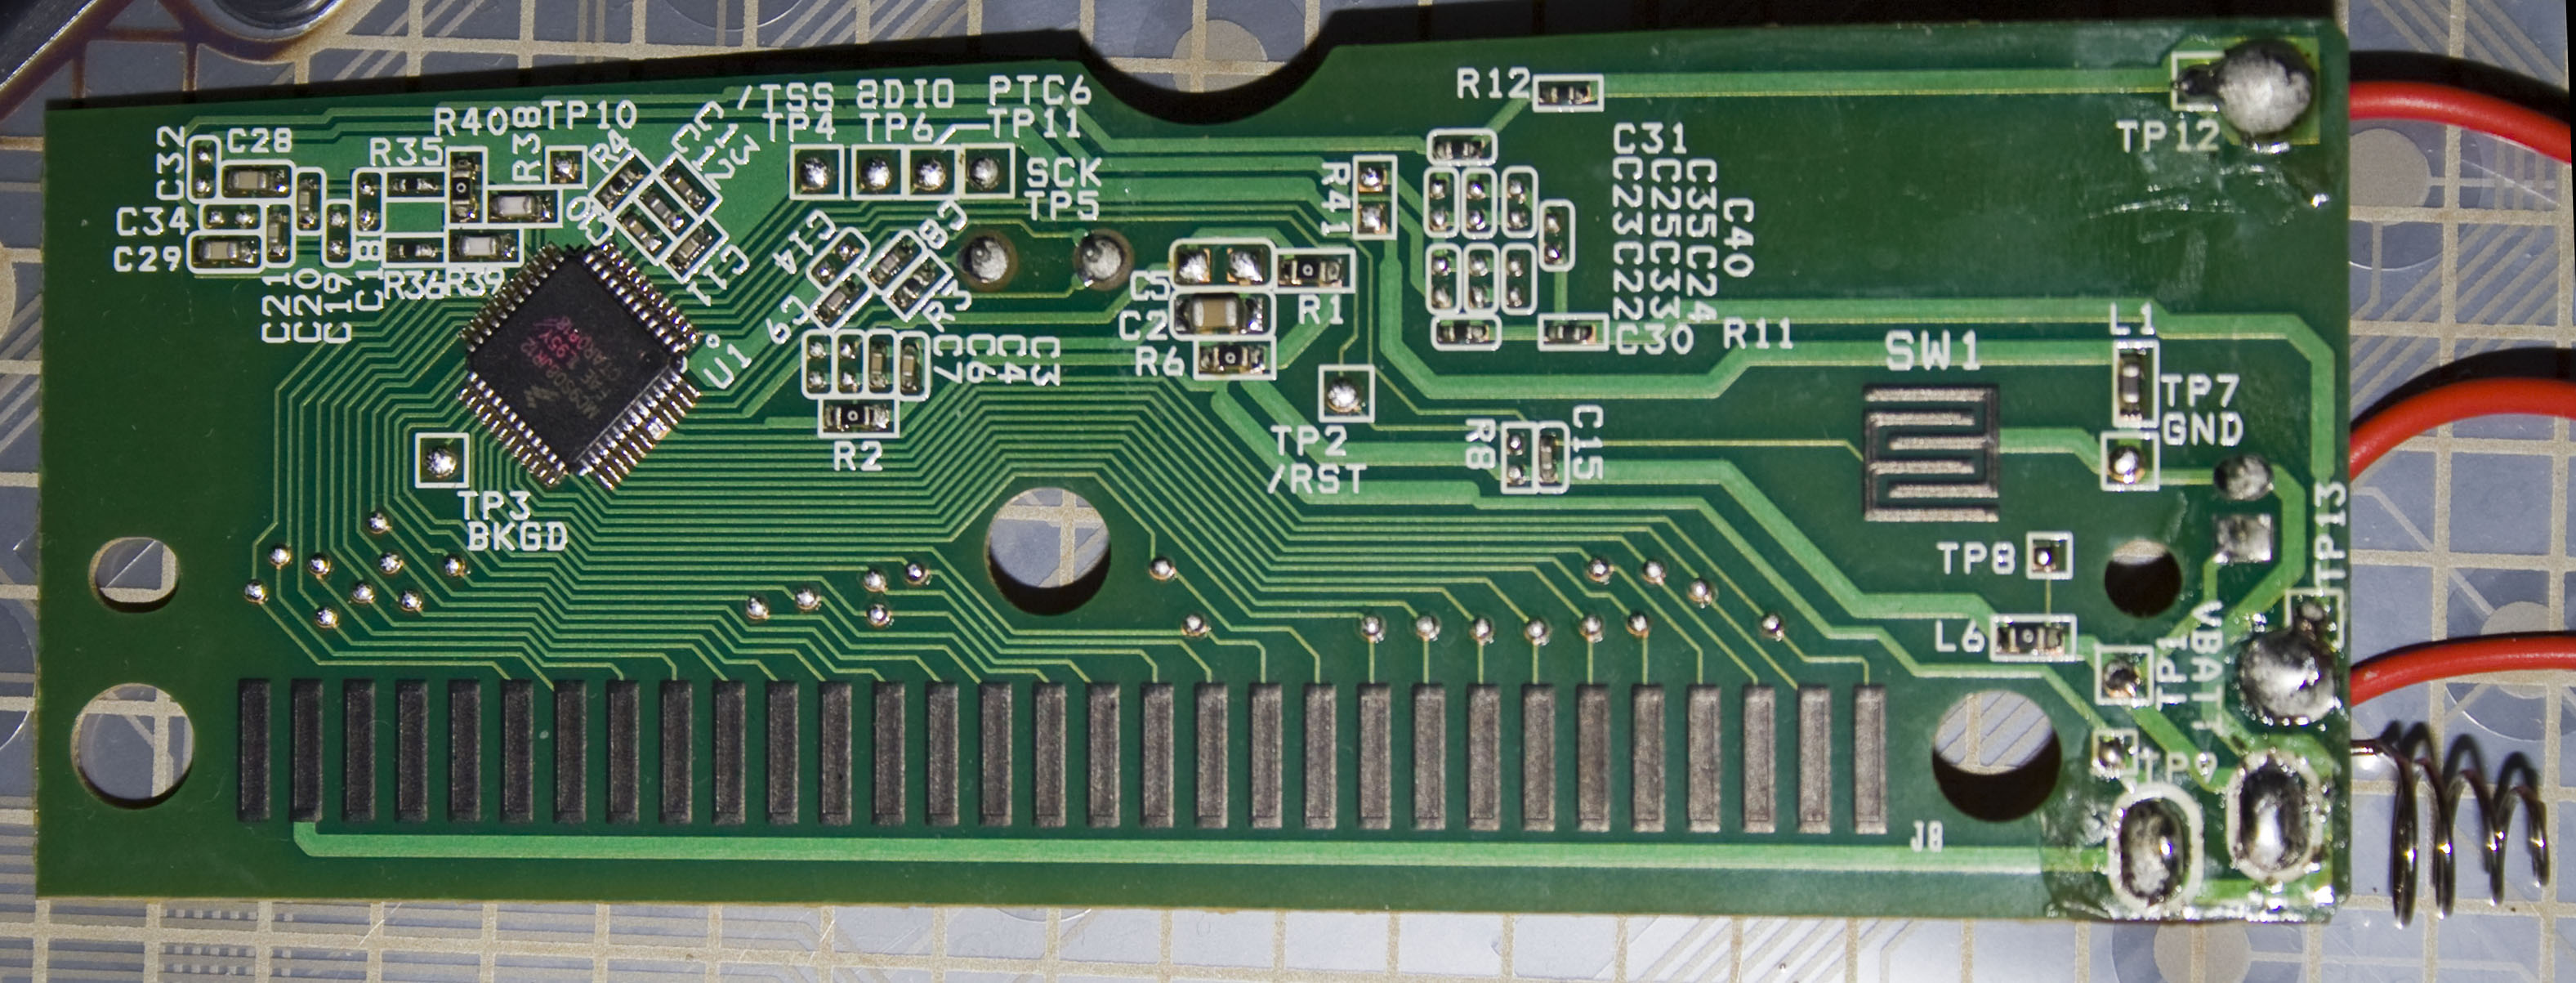 Inside The Logitech Lx310 Cordless Laser Mouse   Keyboard